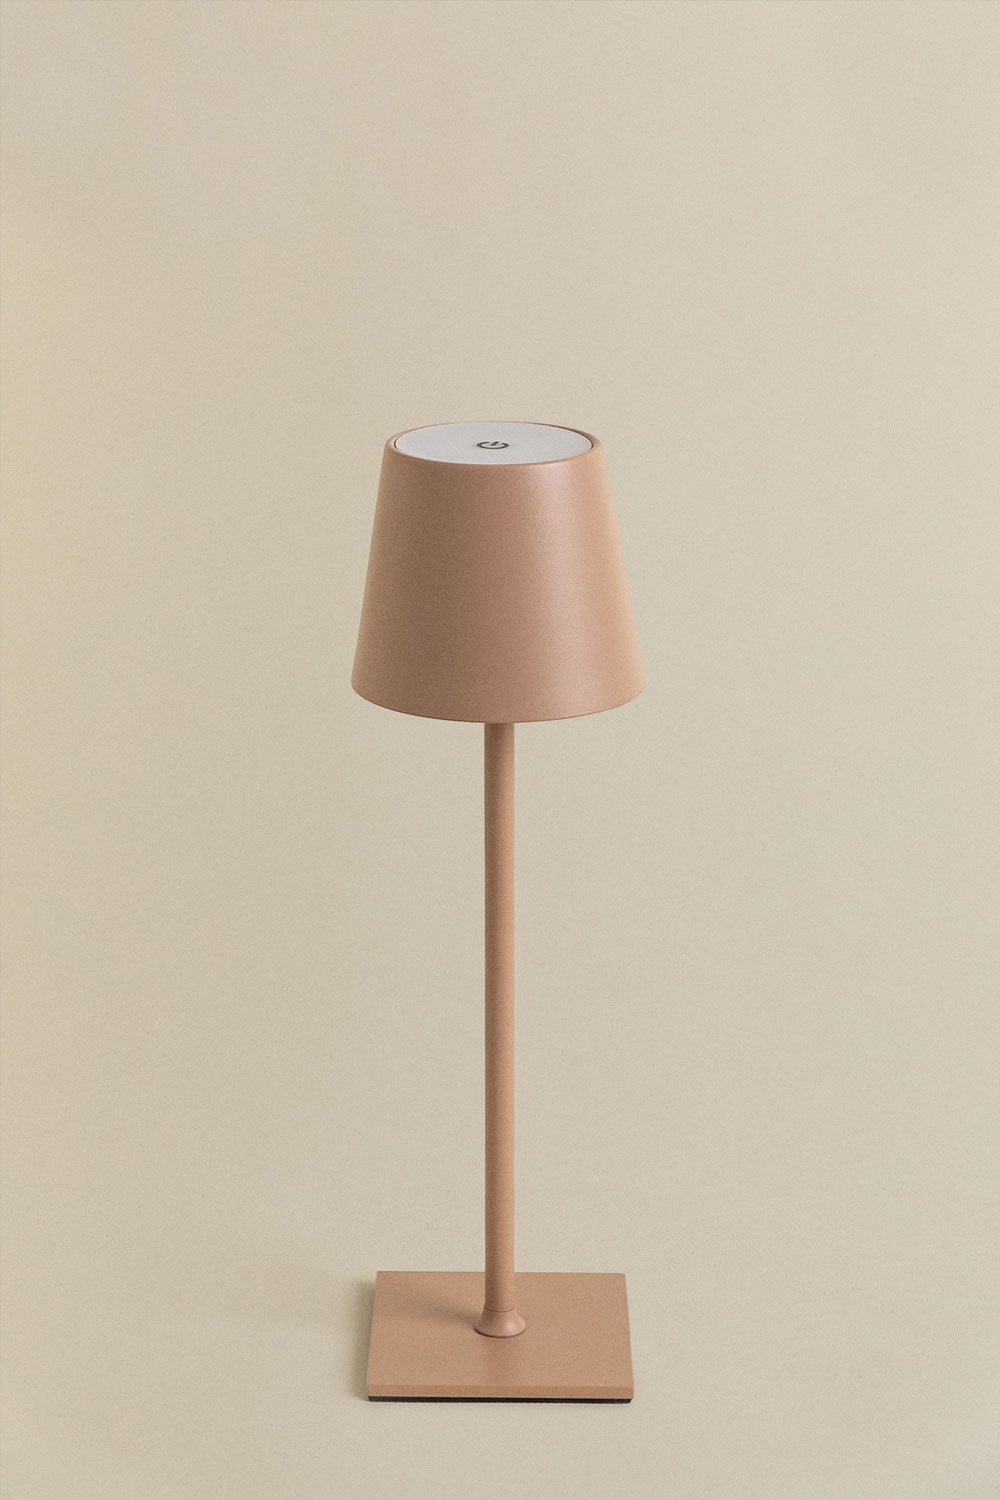 Bolvir cordless table lamp, gallery image 1